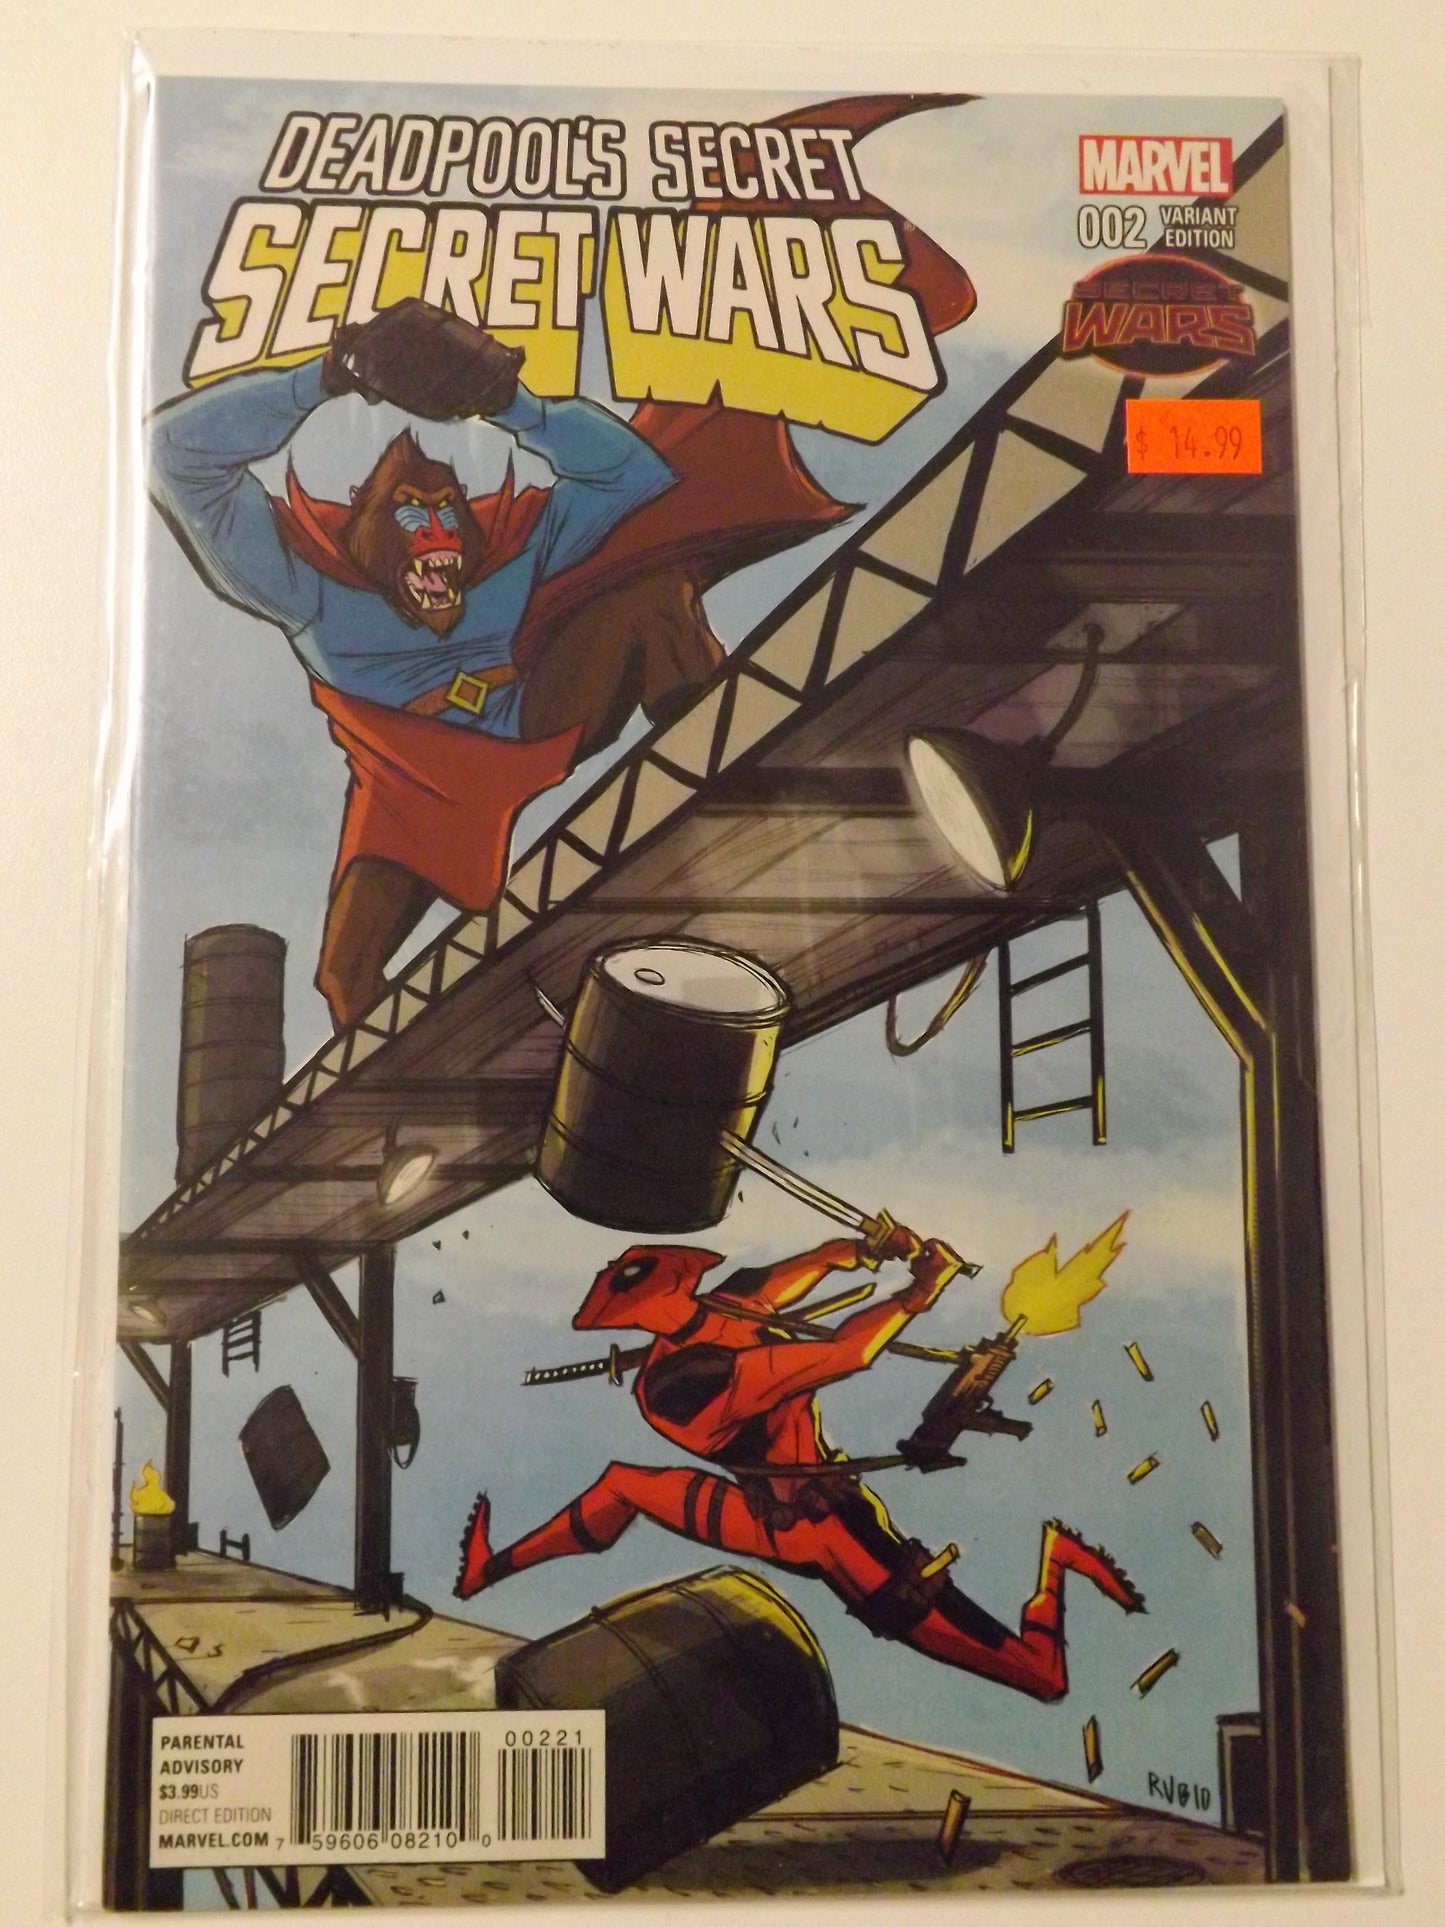 Deadpool's Secret Secret Wars #2 1/25 Retailer Variant